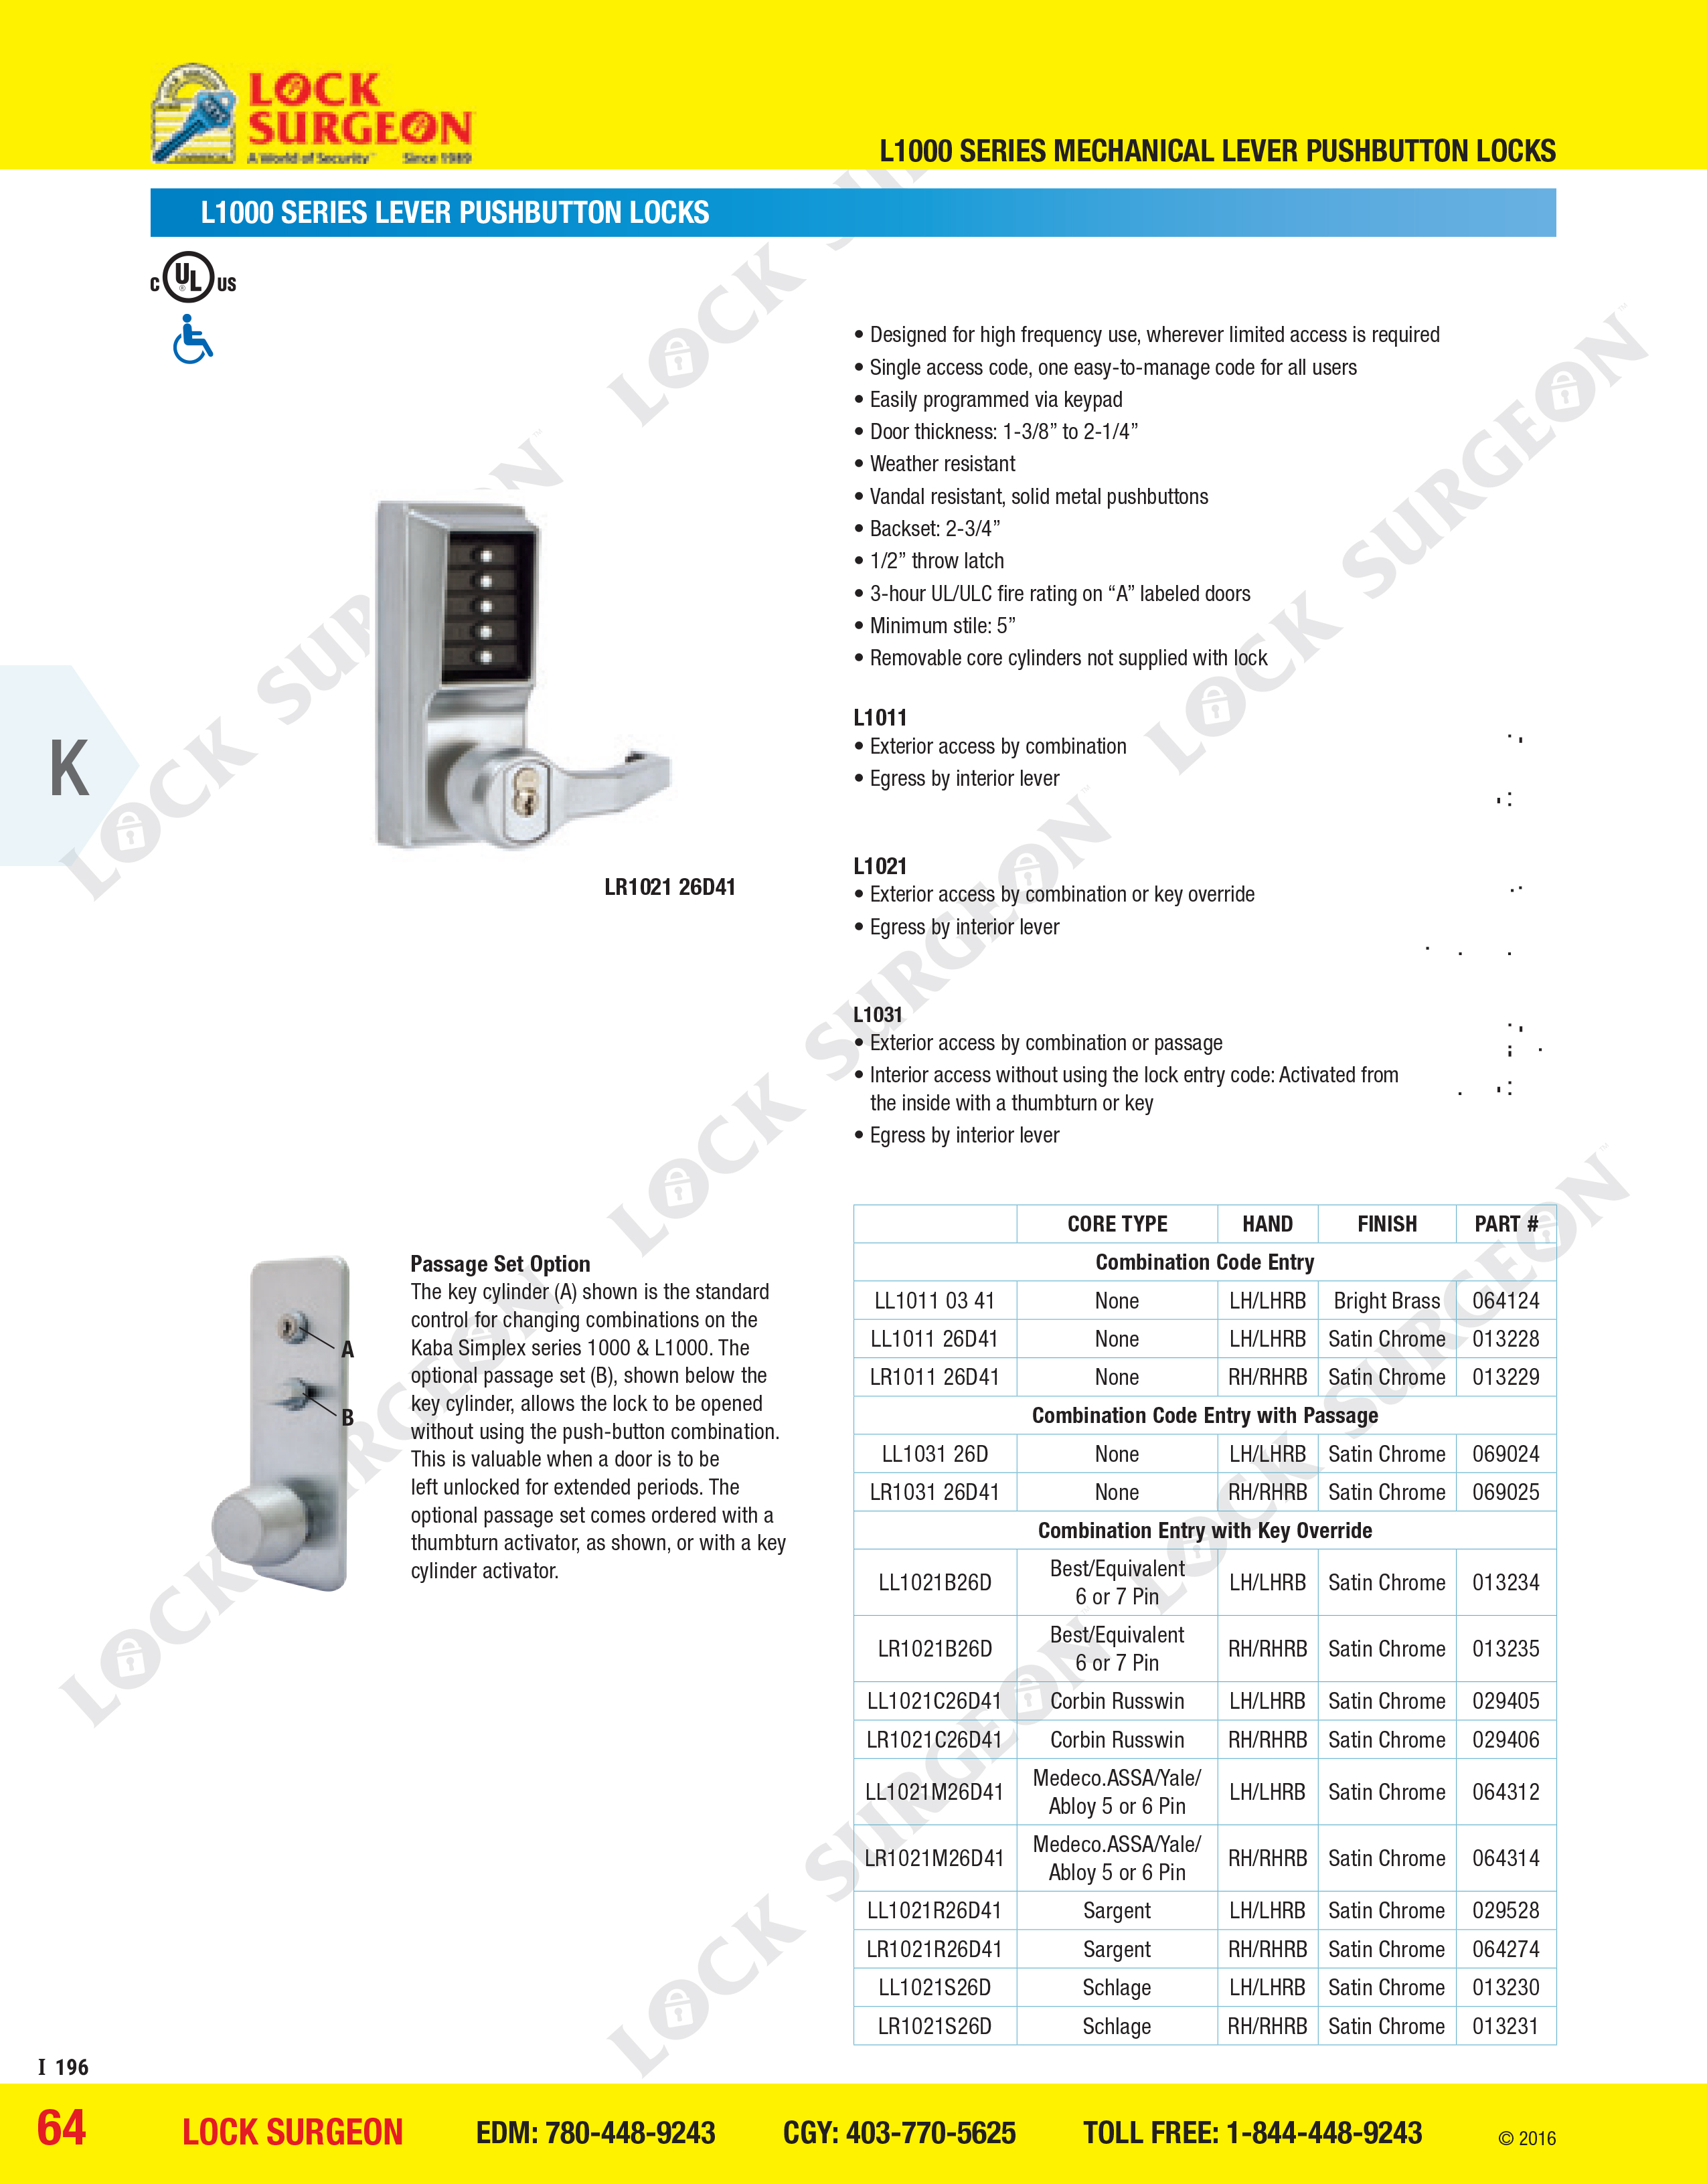 Cochrane Kaba-unican L-1000 series lever push-button locks.